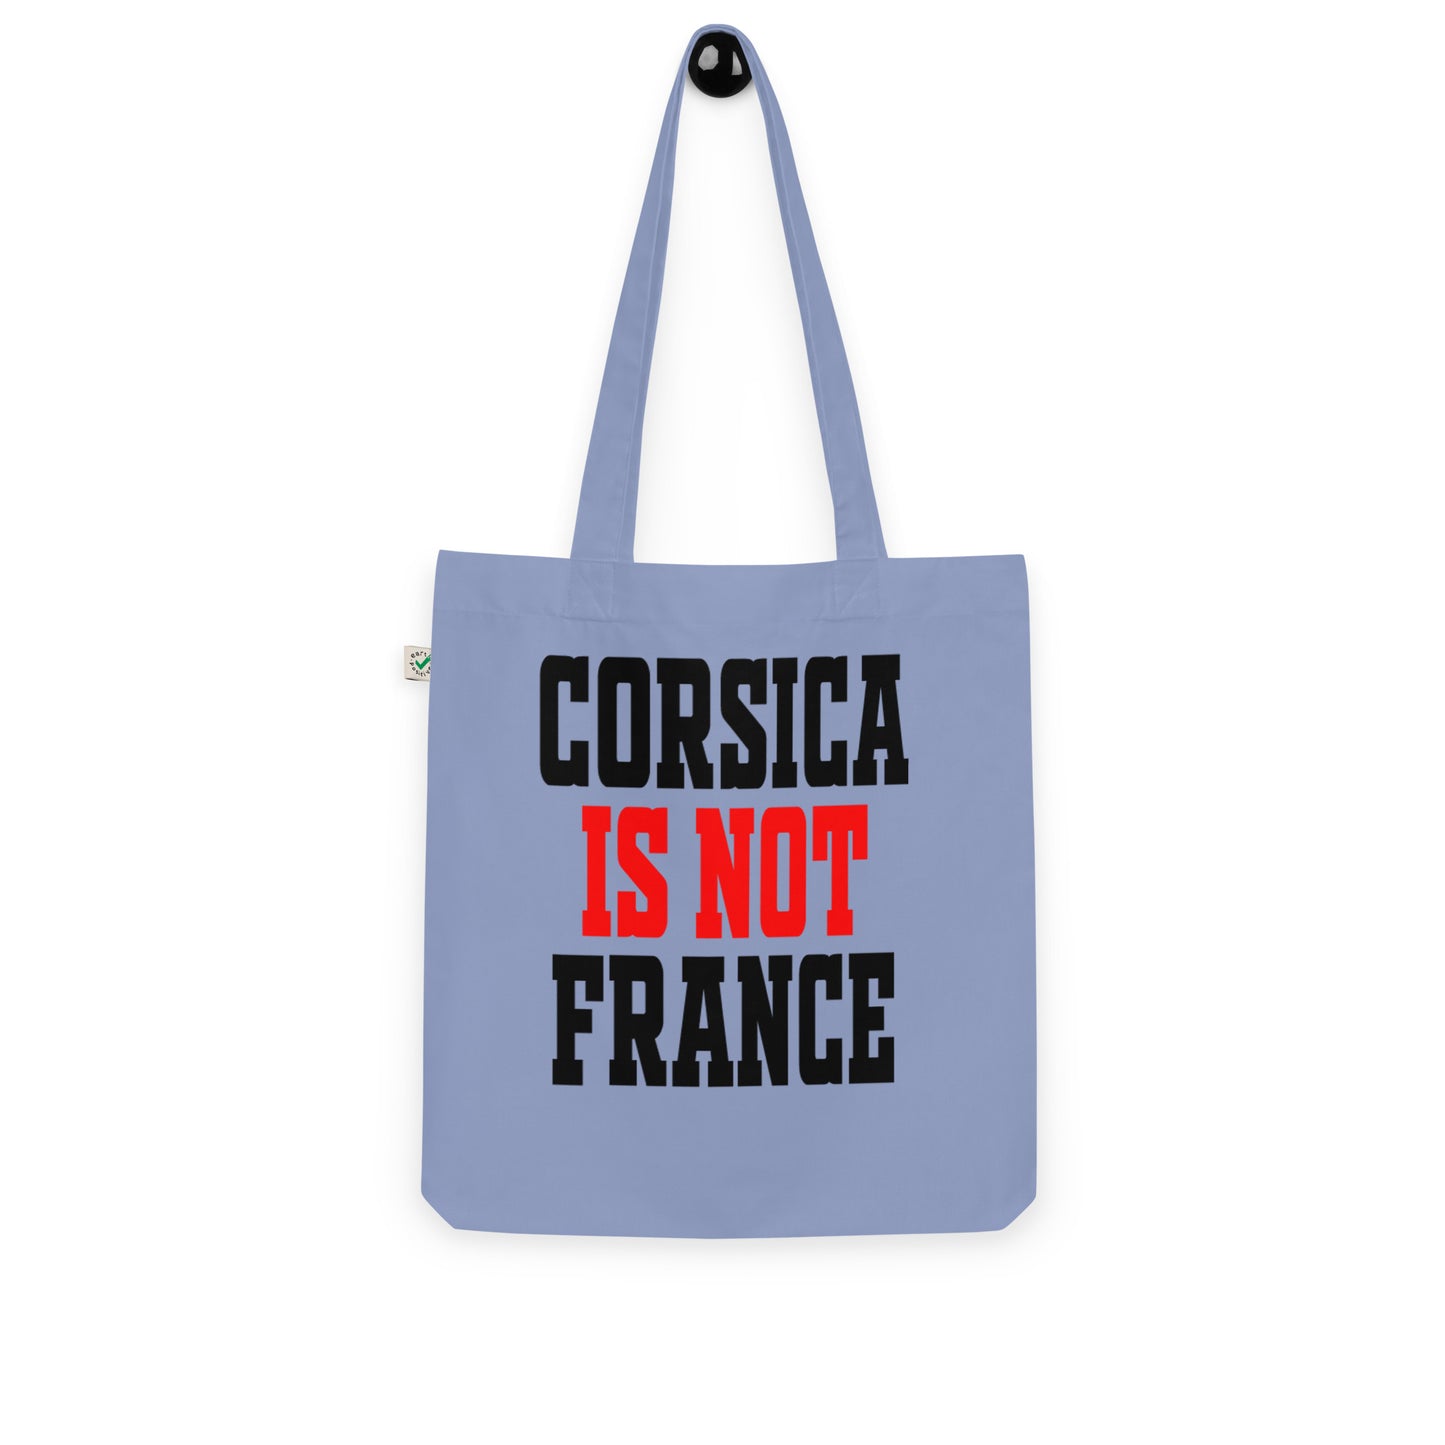 Tote bag tendance et biologique Corsica is not France - Ochju Ochju Ochju Tote bag tendance et biologique Corsica is not France